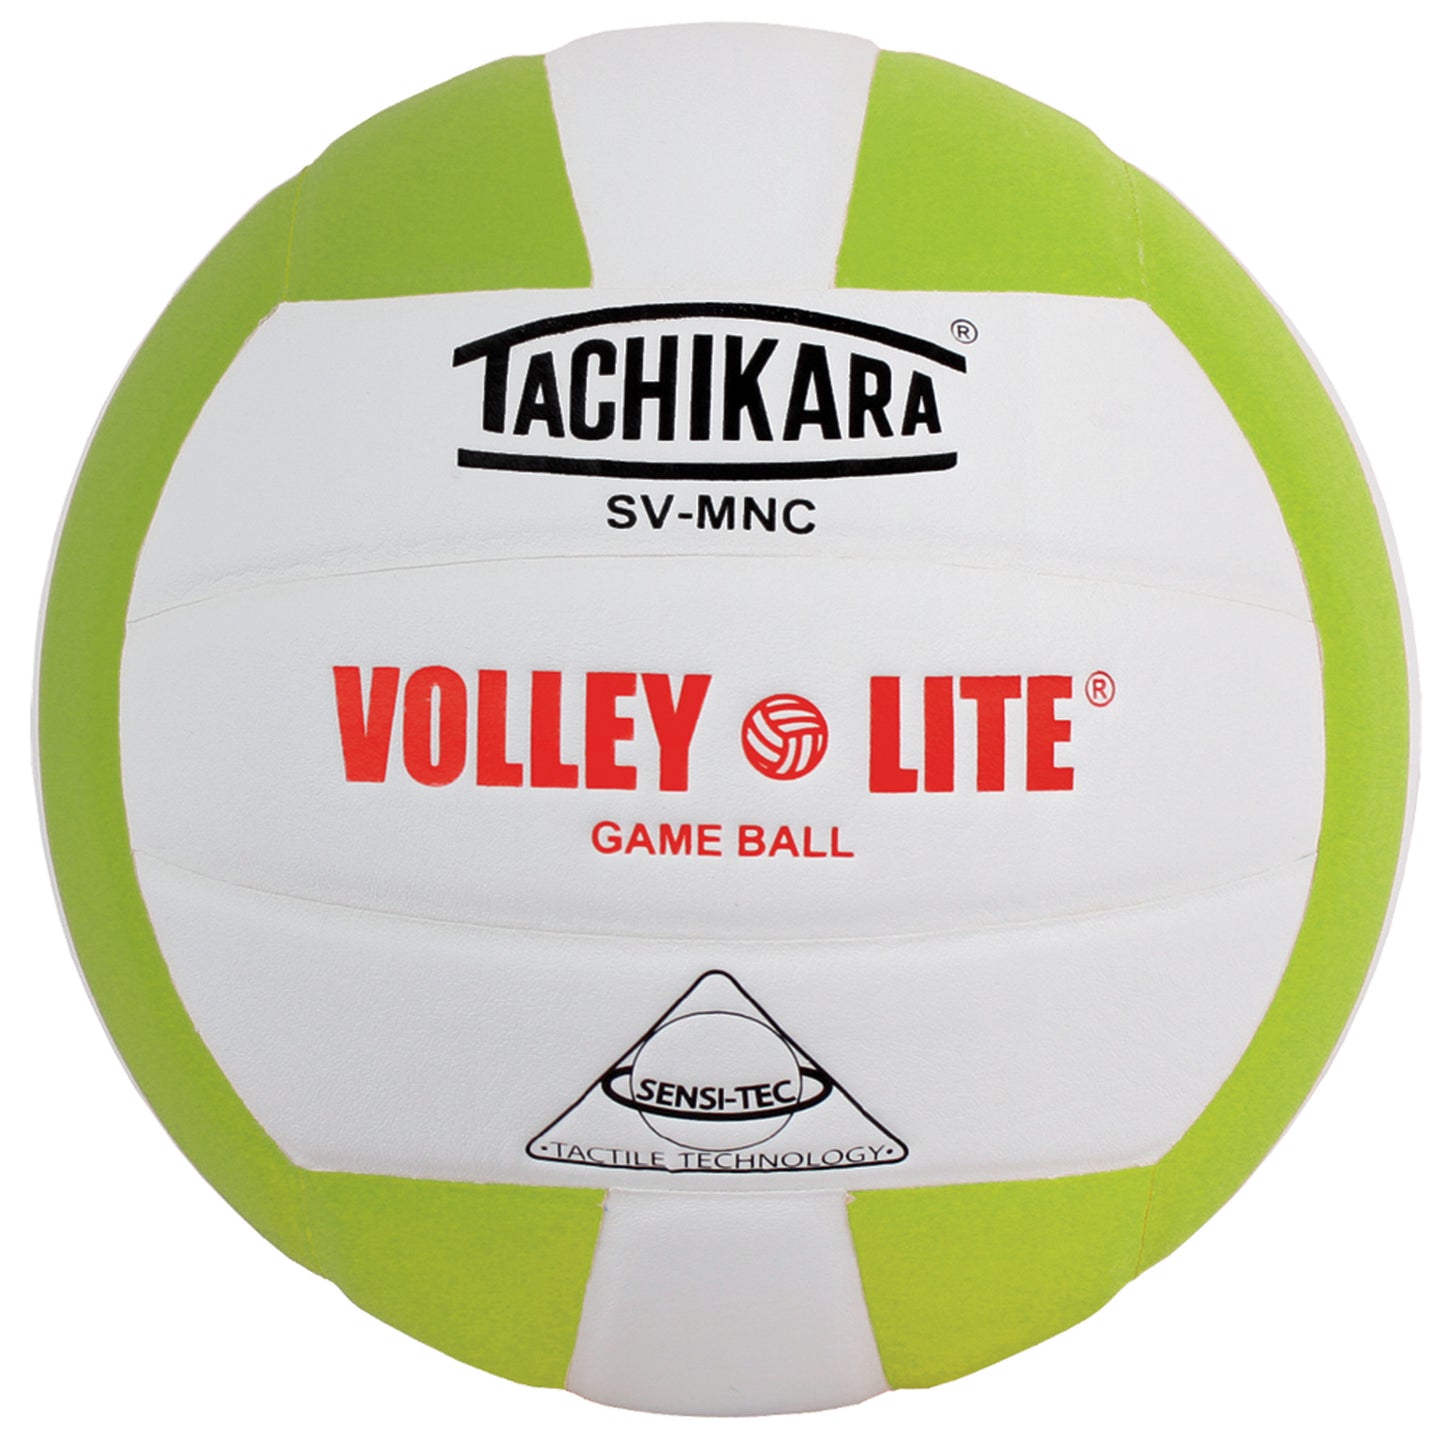 Tachikara SV-MNC "Volley-Lite" Volleyball Lime Green/White